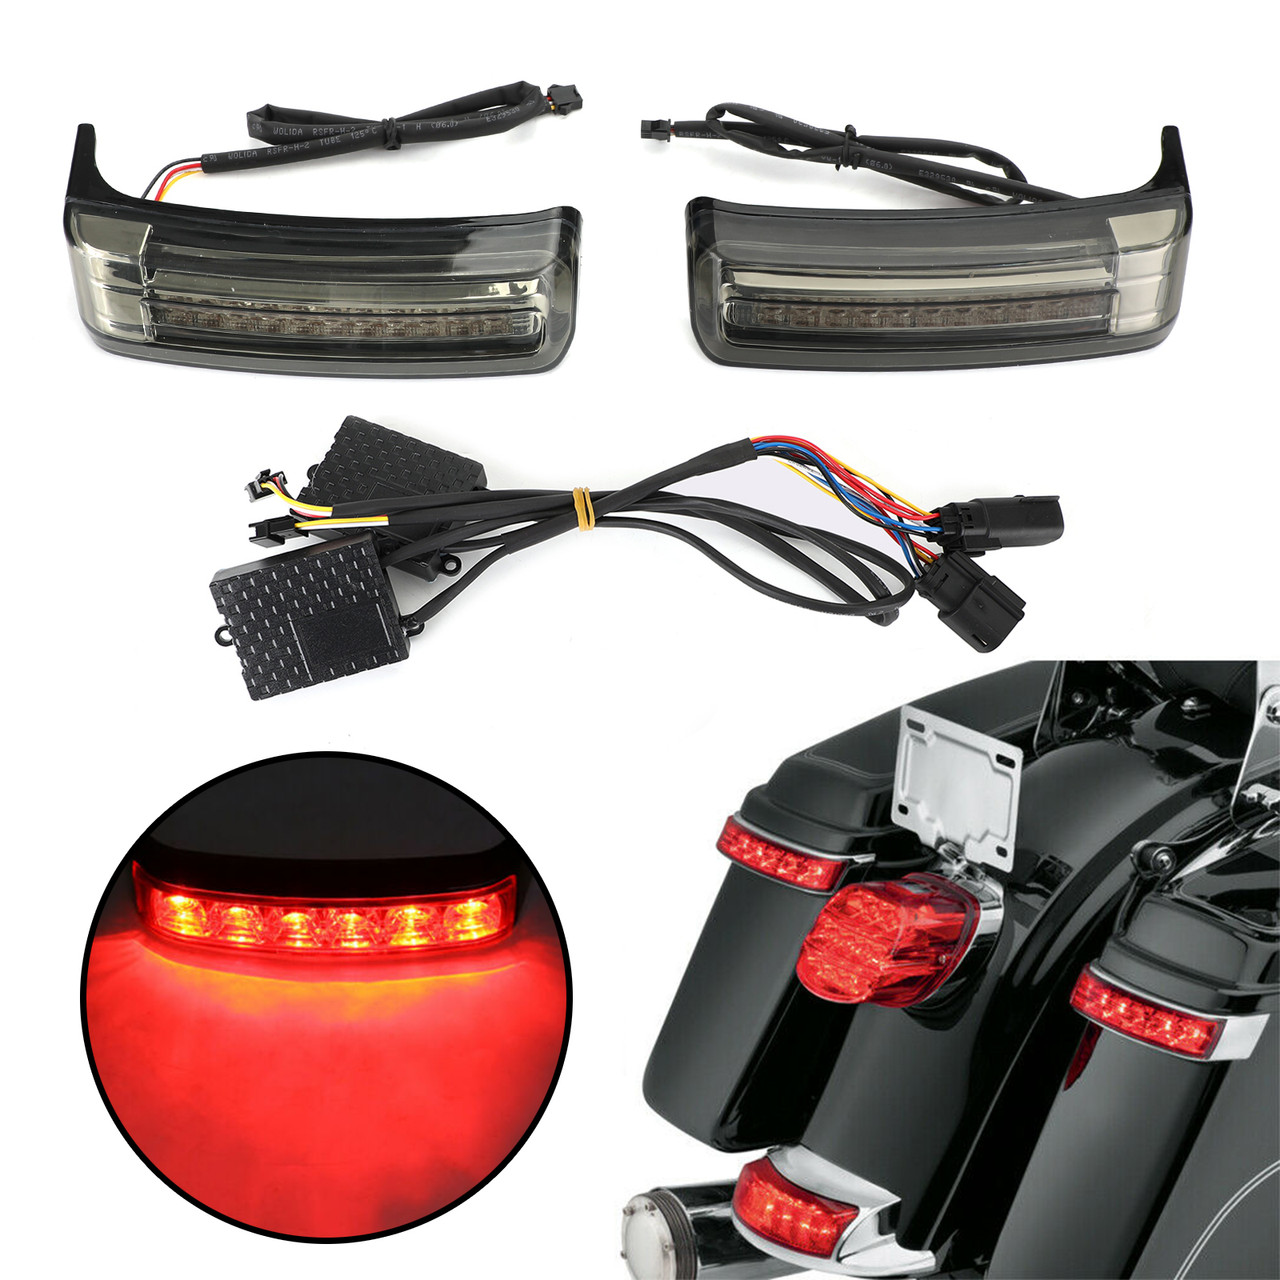 LED Saddlebag Saddle Bags Run Brake Turn Lamp Lights Fit for harley Ultra Limited FLHTK CVO Limited FLHTKSE Smoke